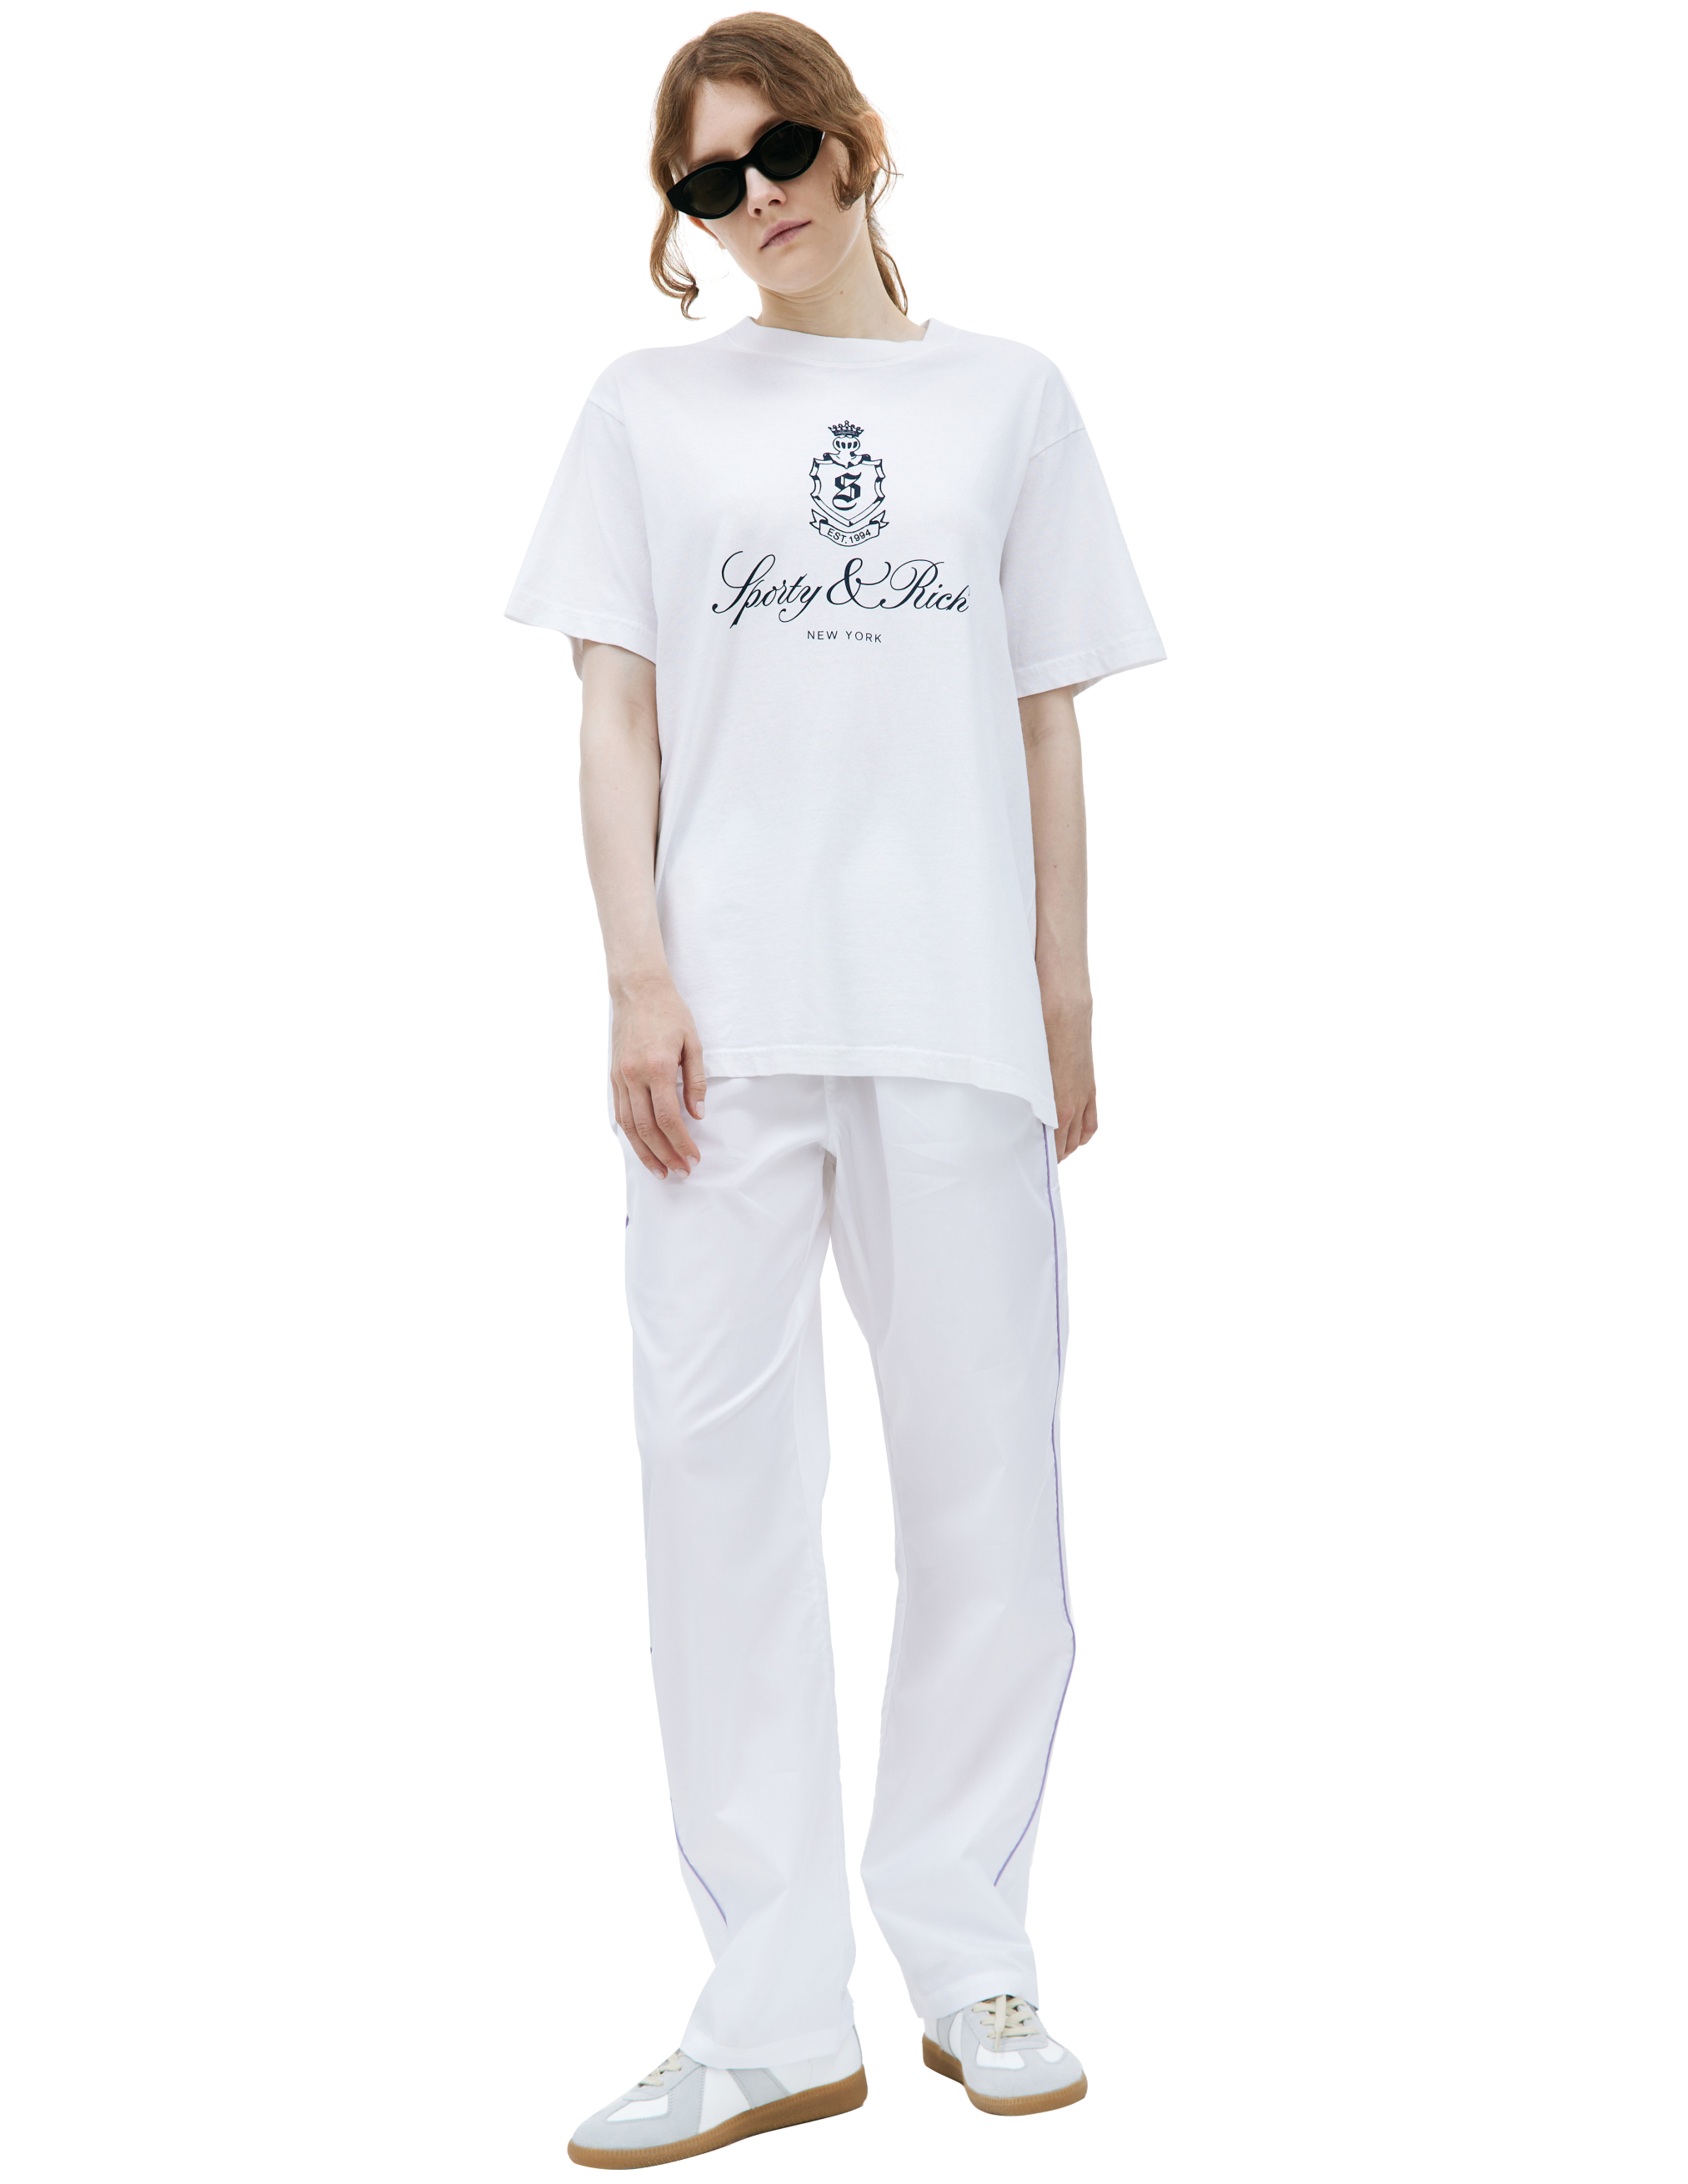 Белая футболка Vendome SPORTY & RICH TS852WH, размер S;M;L;XL - фото 1